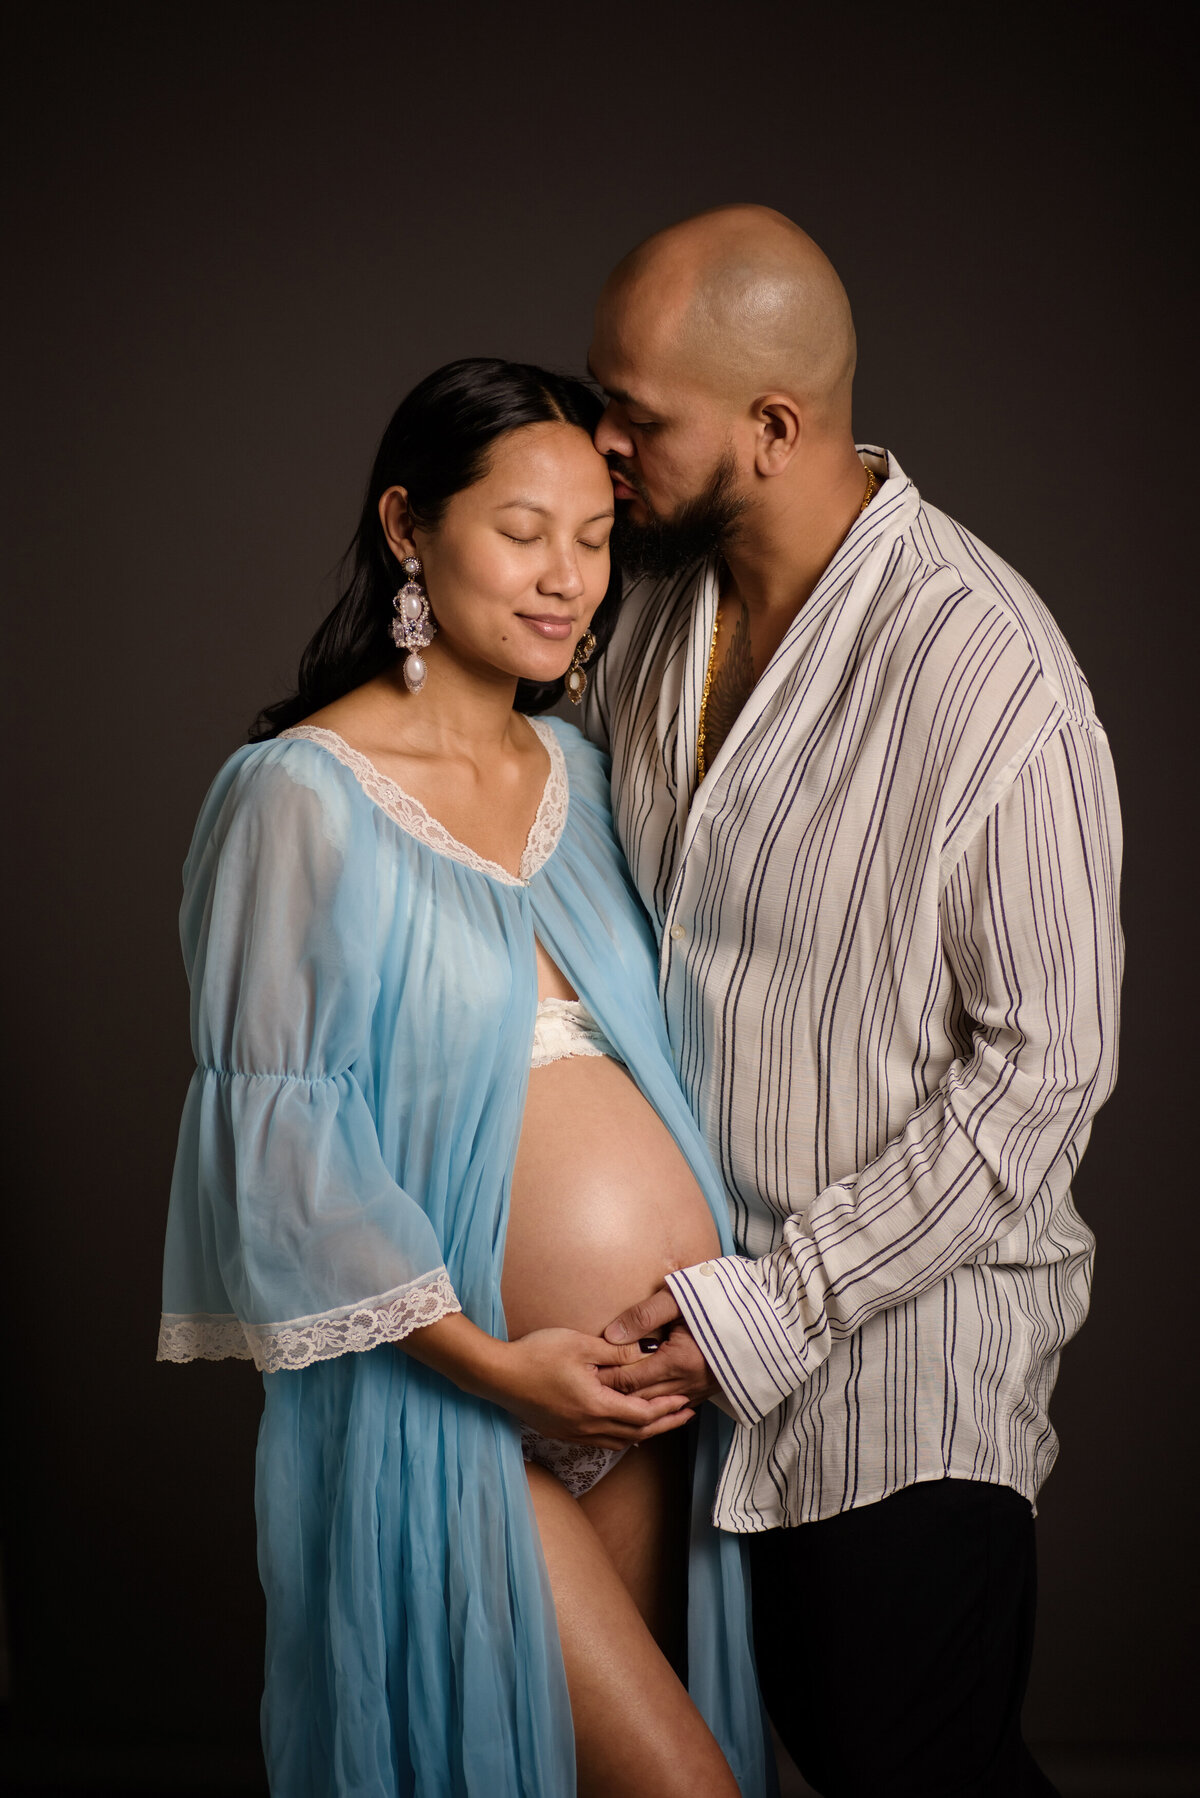 boston-portrait-photographer-studio-portraits-lowell-ma-massachusetts-portrait-studio-maternity-studio-boudoir-milestone-baby-newborn-family